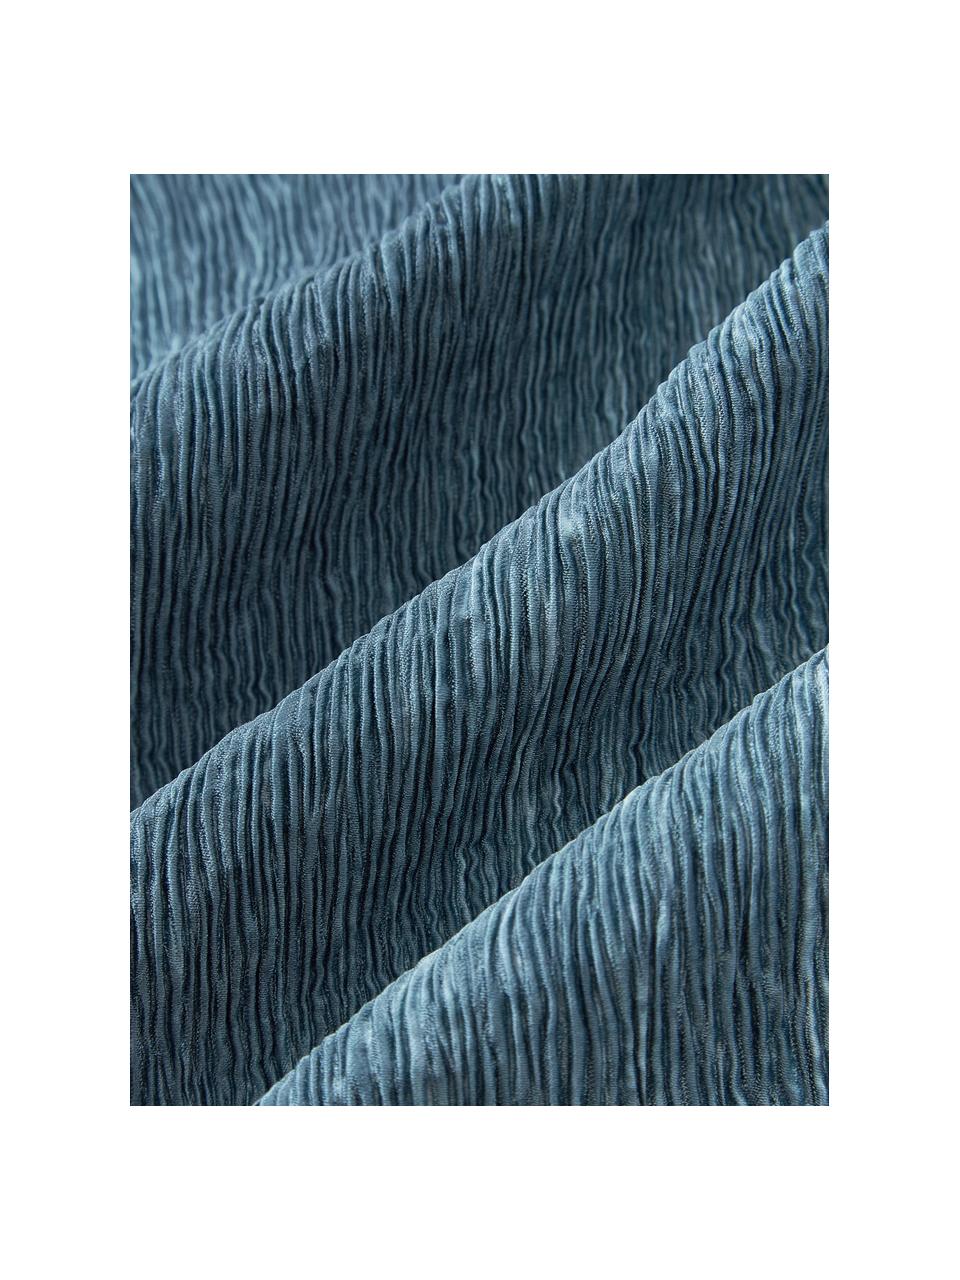 Kissenhülle Aline mit strukturierter Oberfläche, 100 % Polyester, Blau, B 40 x L 40 cm